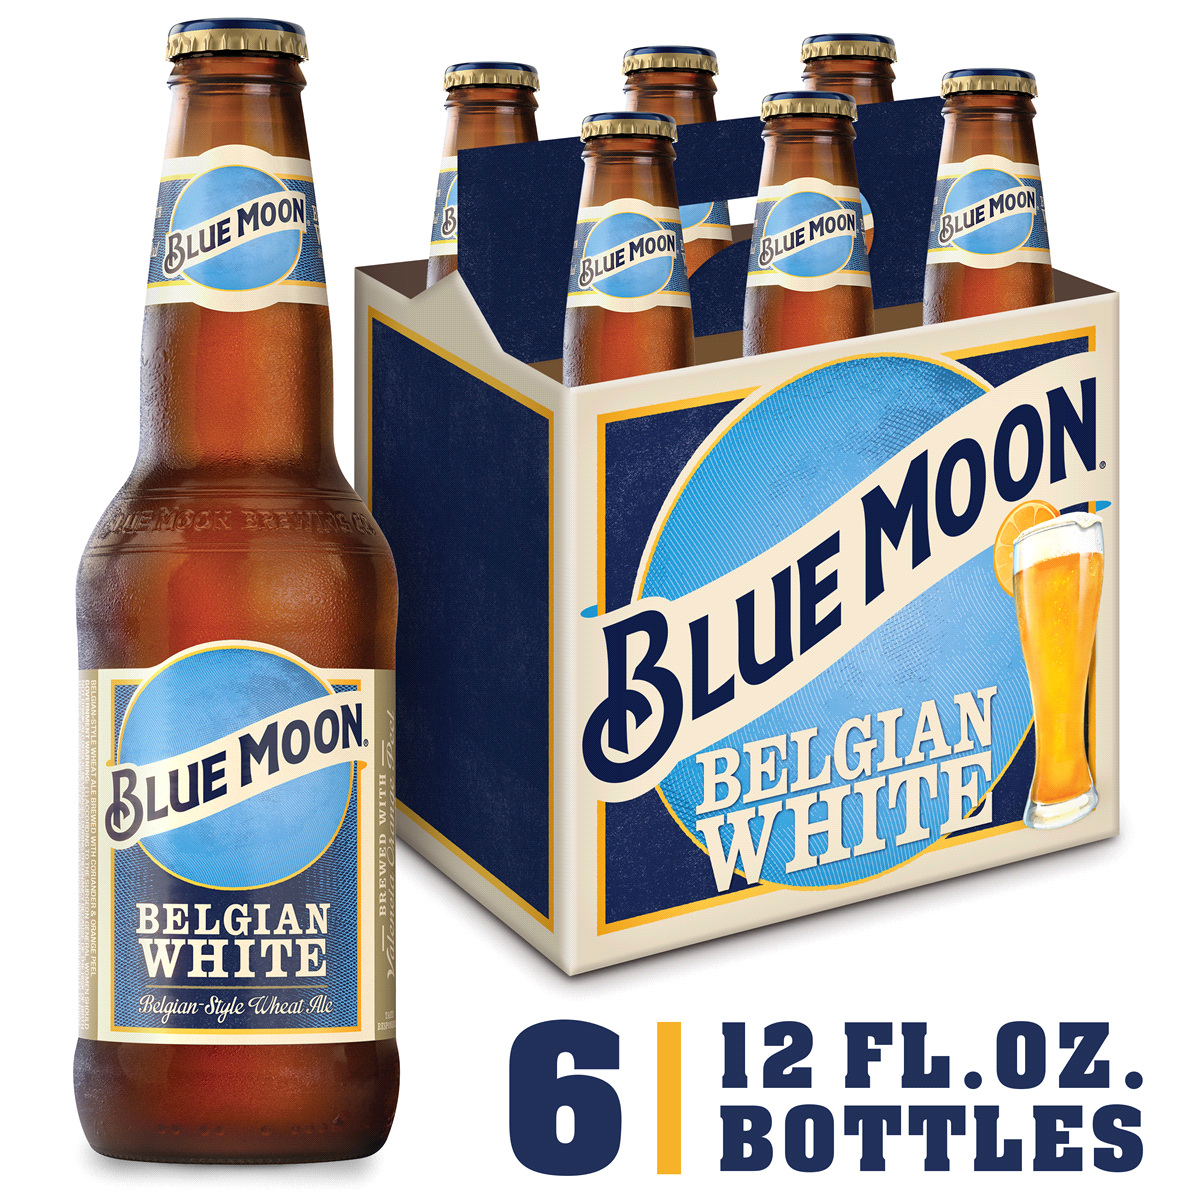 Blue Moon Belgian White Belgian Style Wheat Ale Beer, 6 Pack, 12 fl.